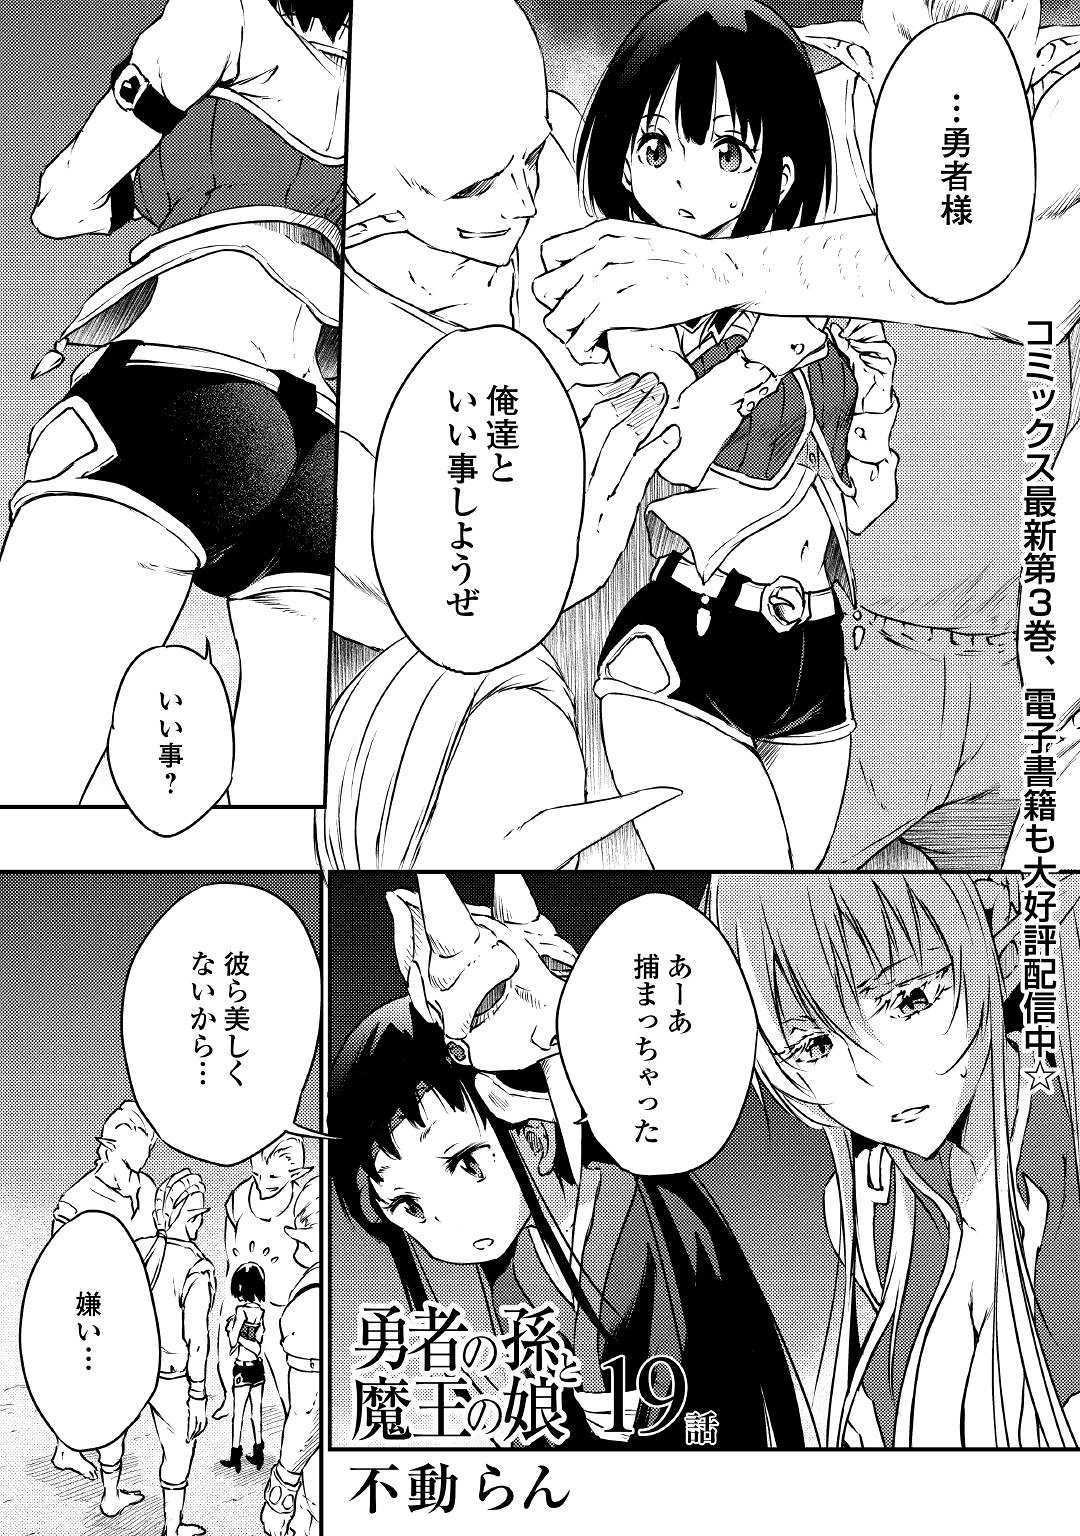 Yuusha no Mago to Maou no Musume - Chapter 19 - Page 1